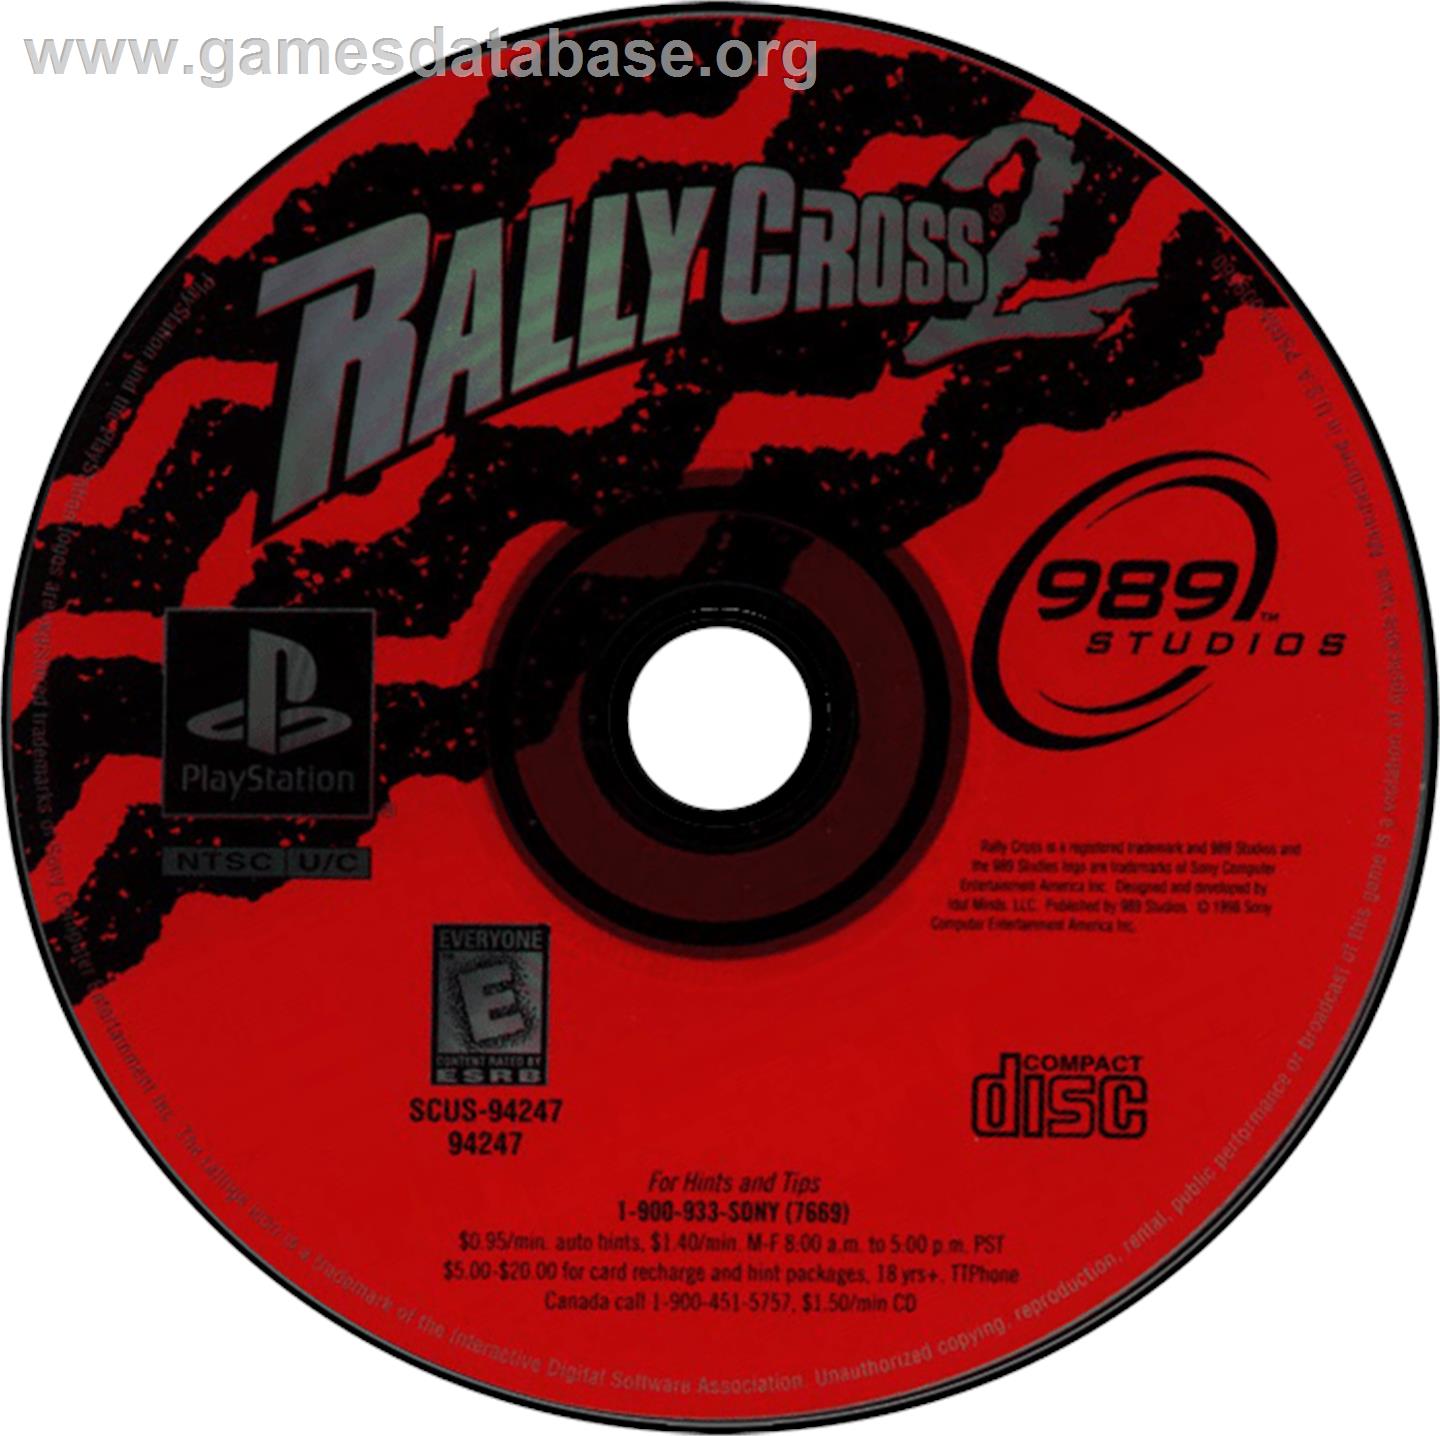 Rally Cross 2 - Sony Playstation - Artwork - Disc